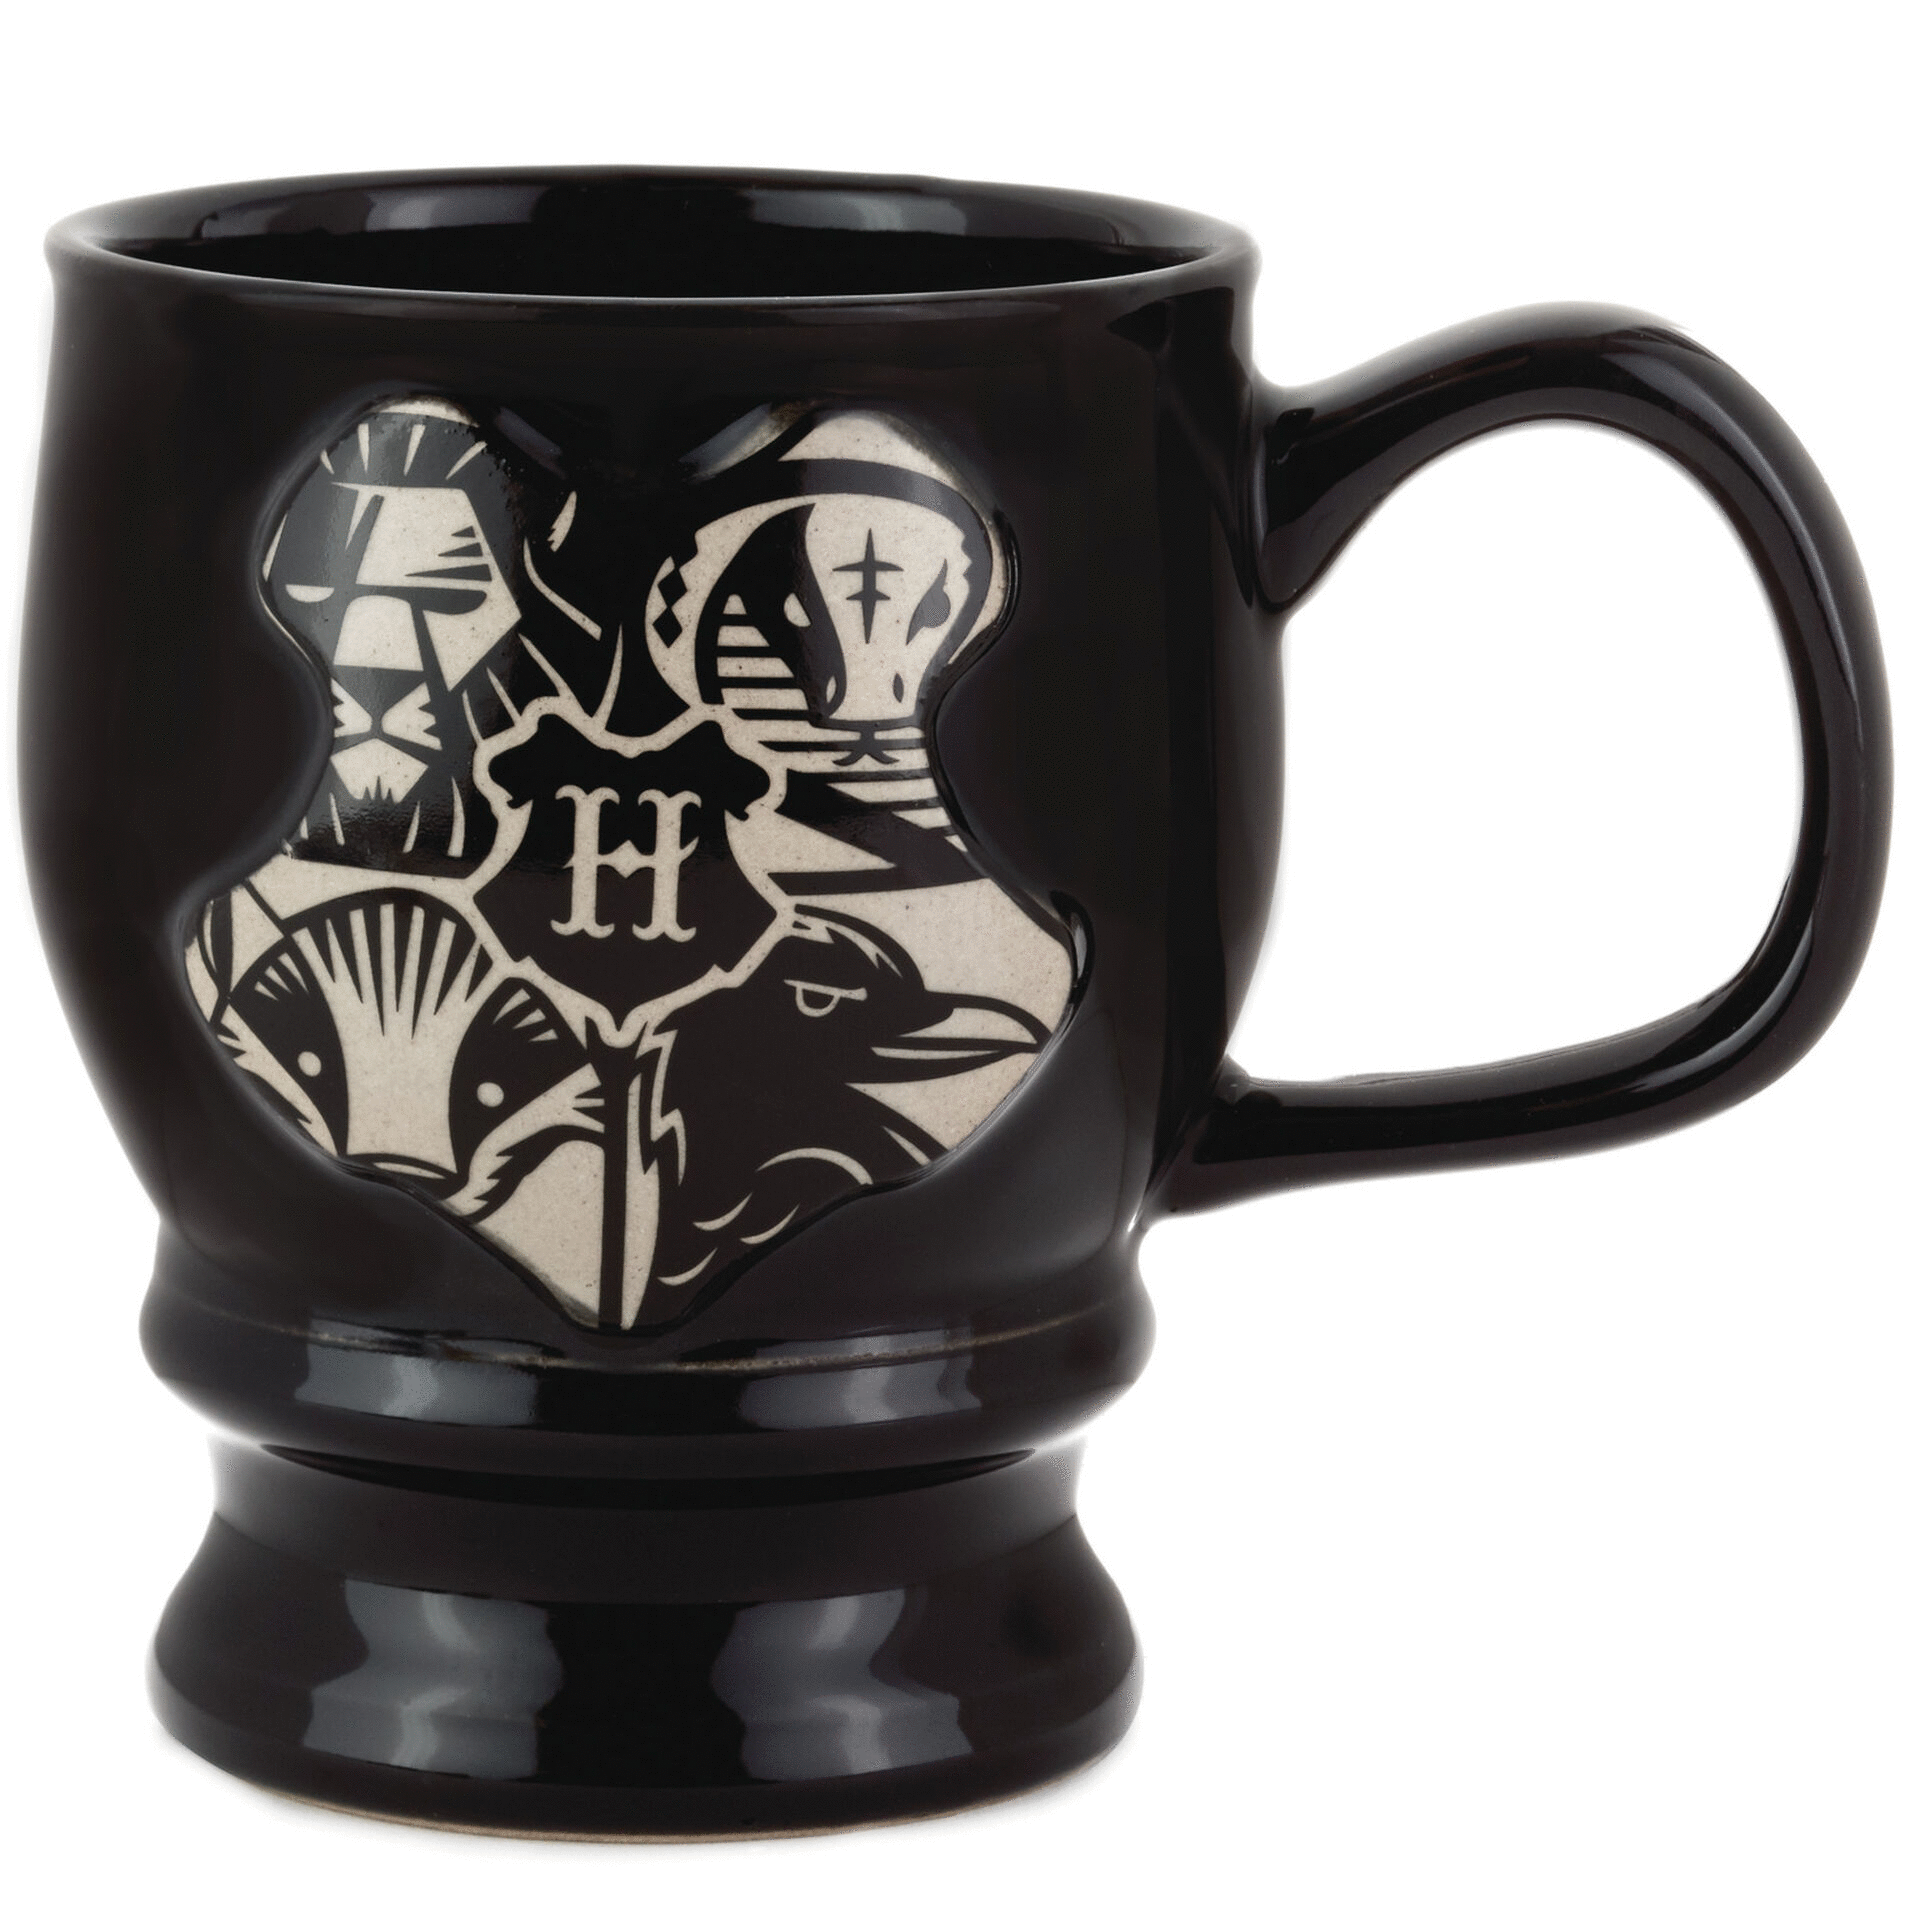 Harry Potter, Hogwarts, House Crest: taza. Tazas. Cafebrería El Péndulo